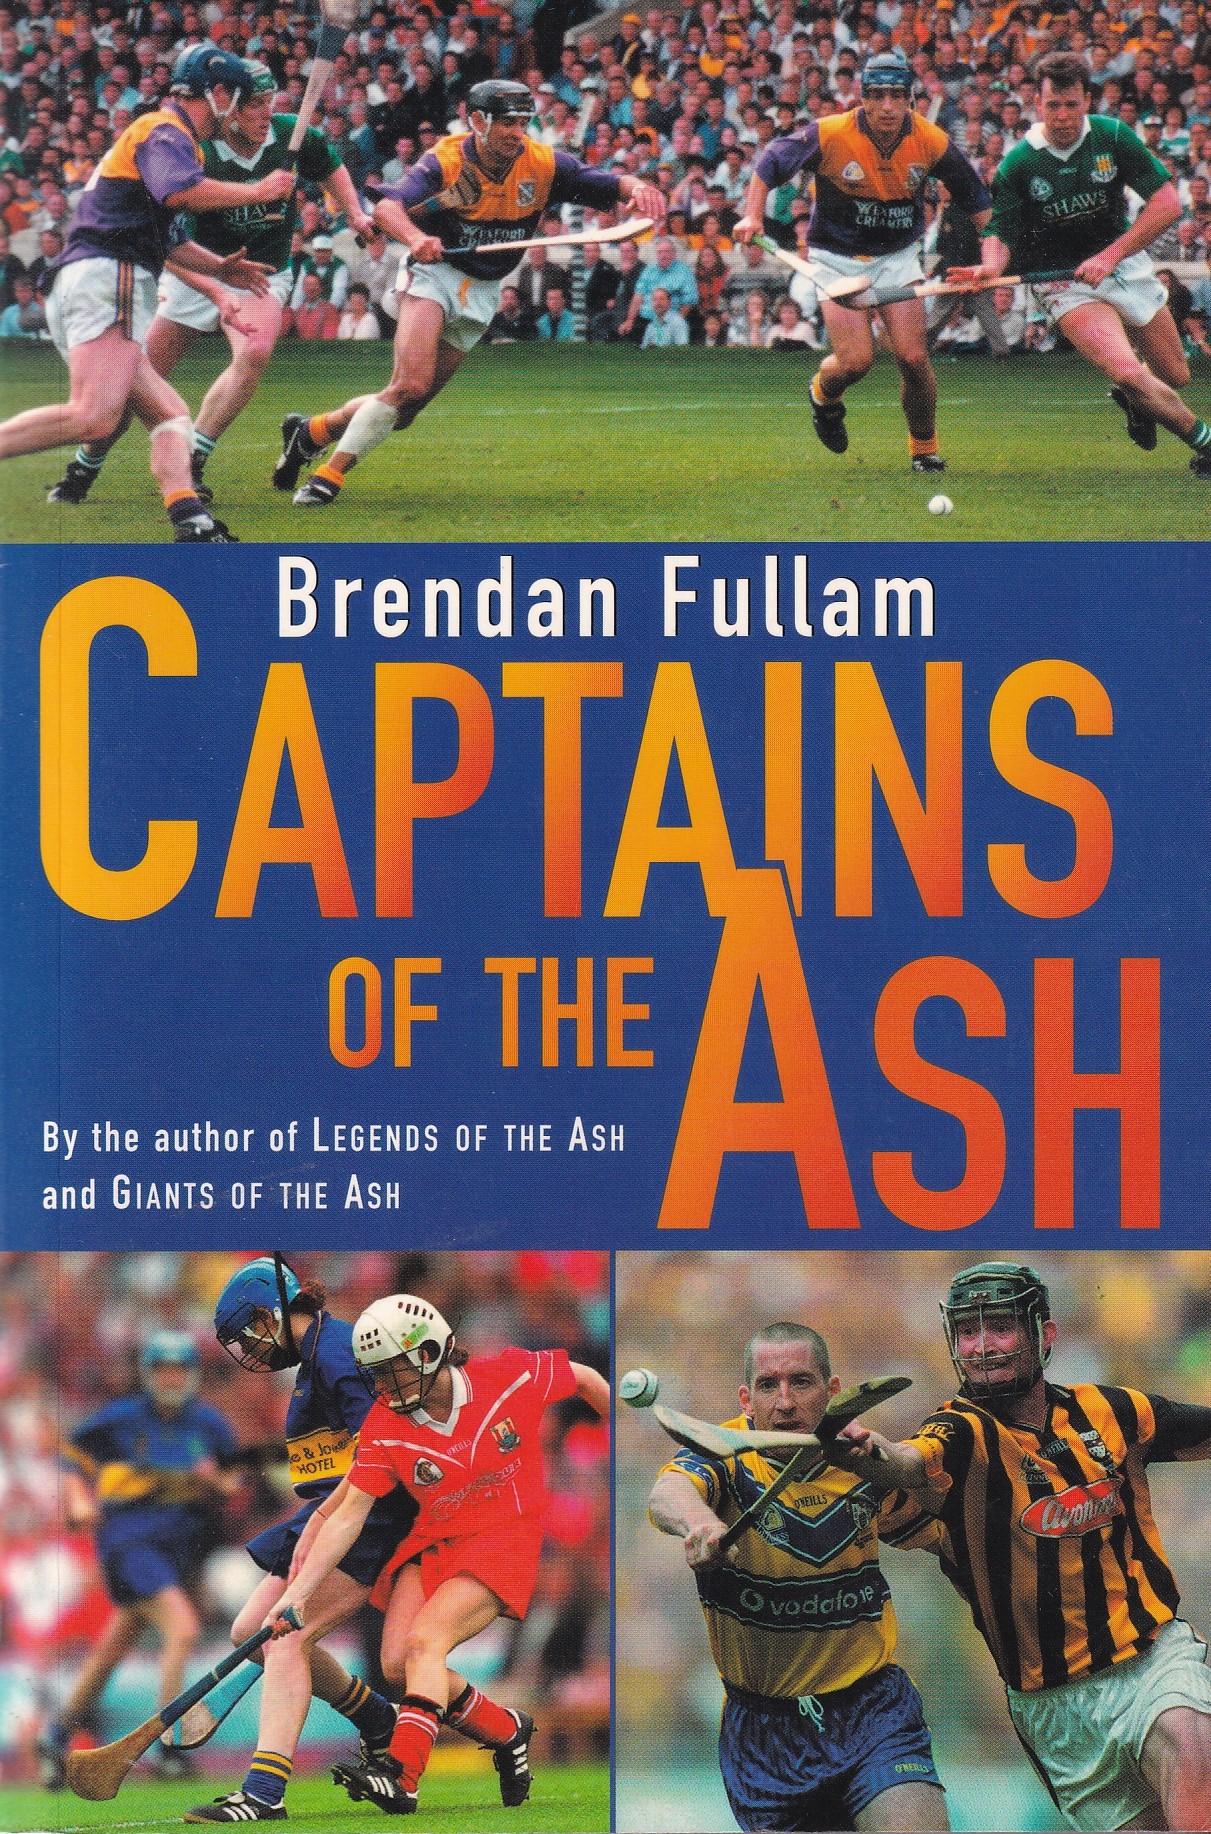 Captains of the Ash by Fullam, Brendan